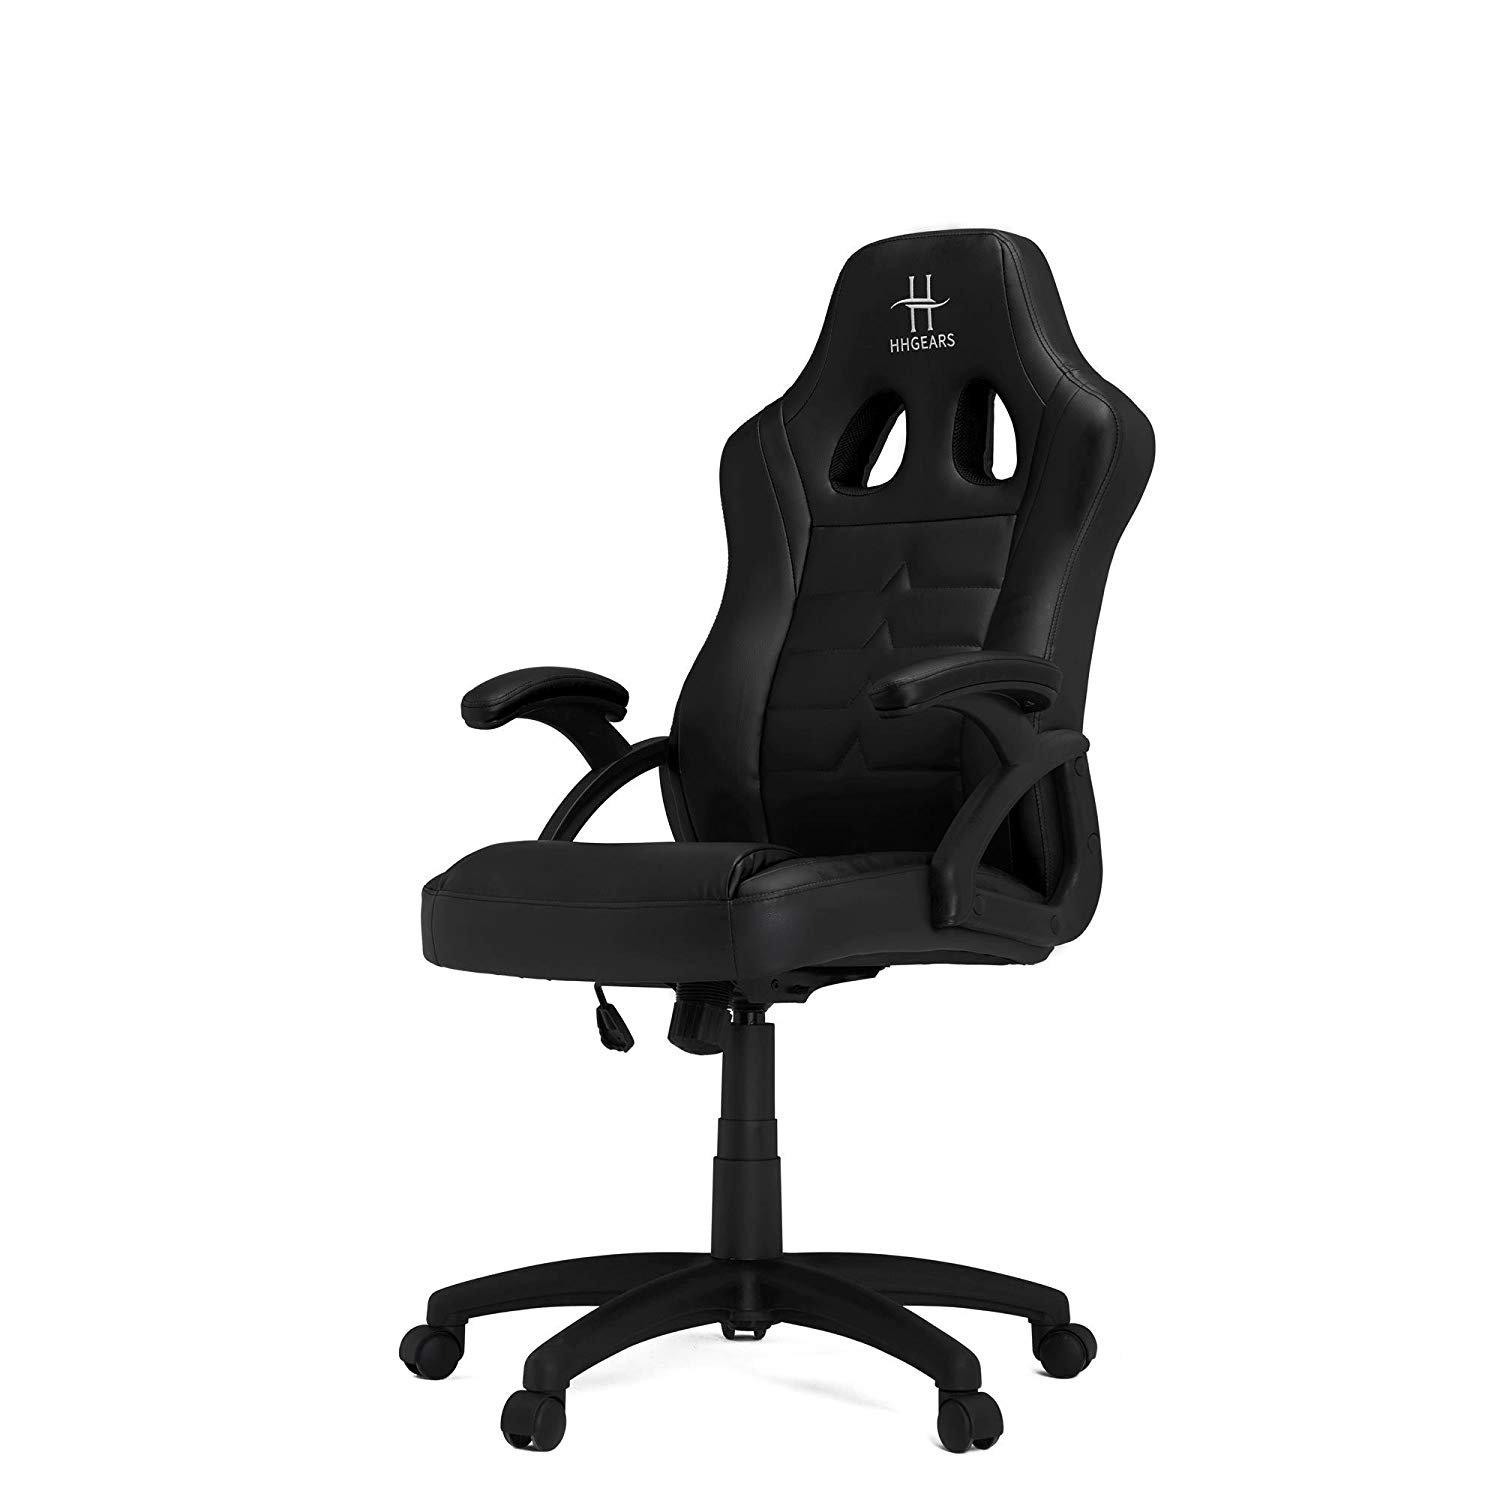 SM-115 Black Gaming Chair | GameStop